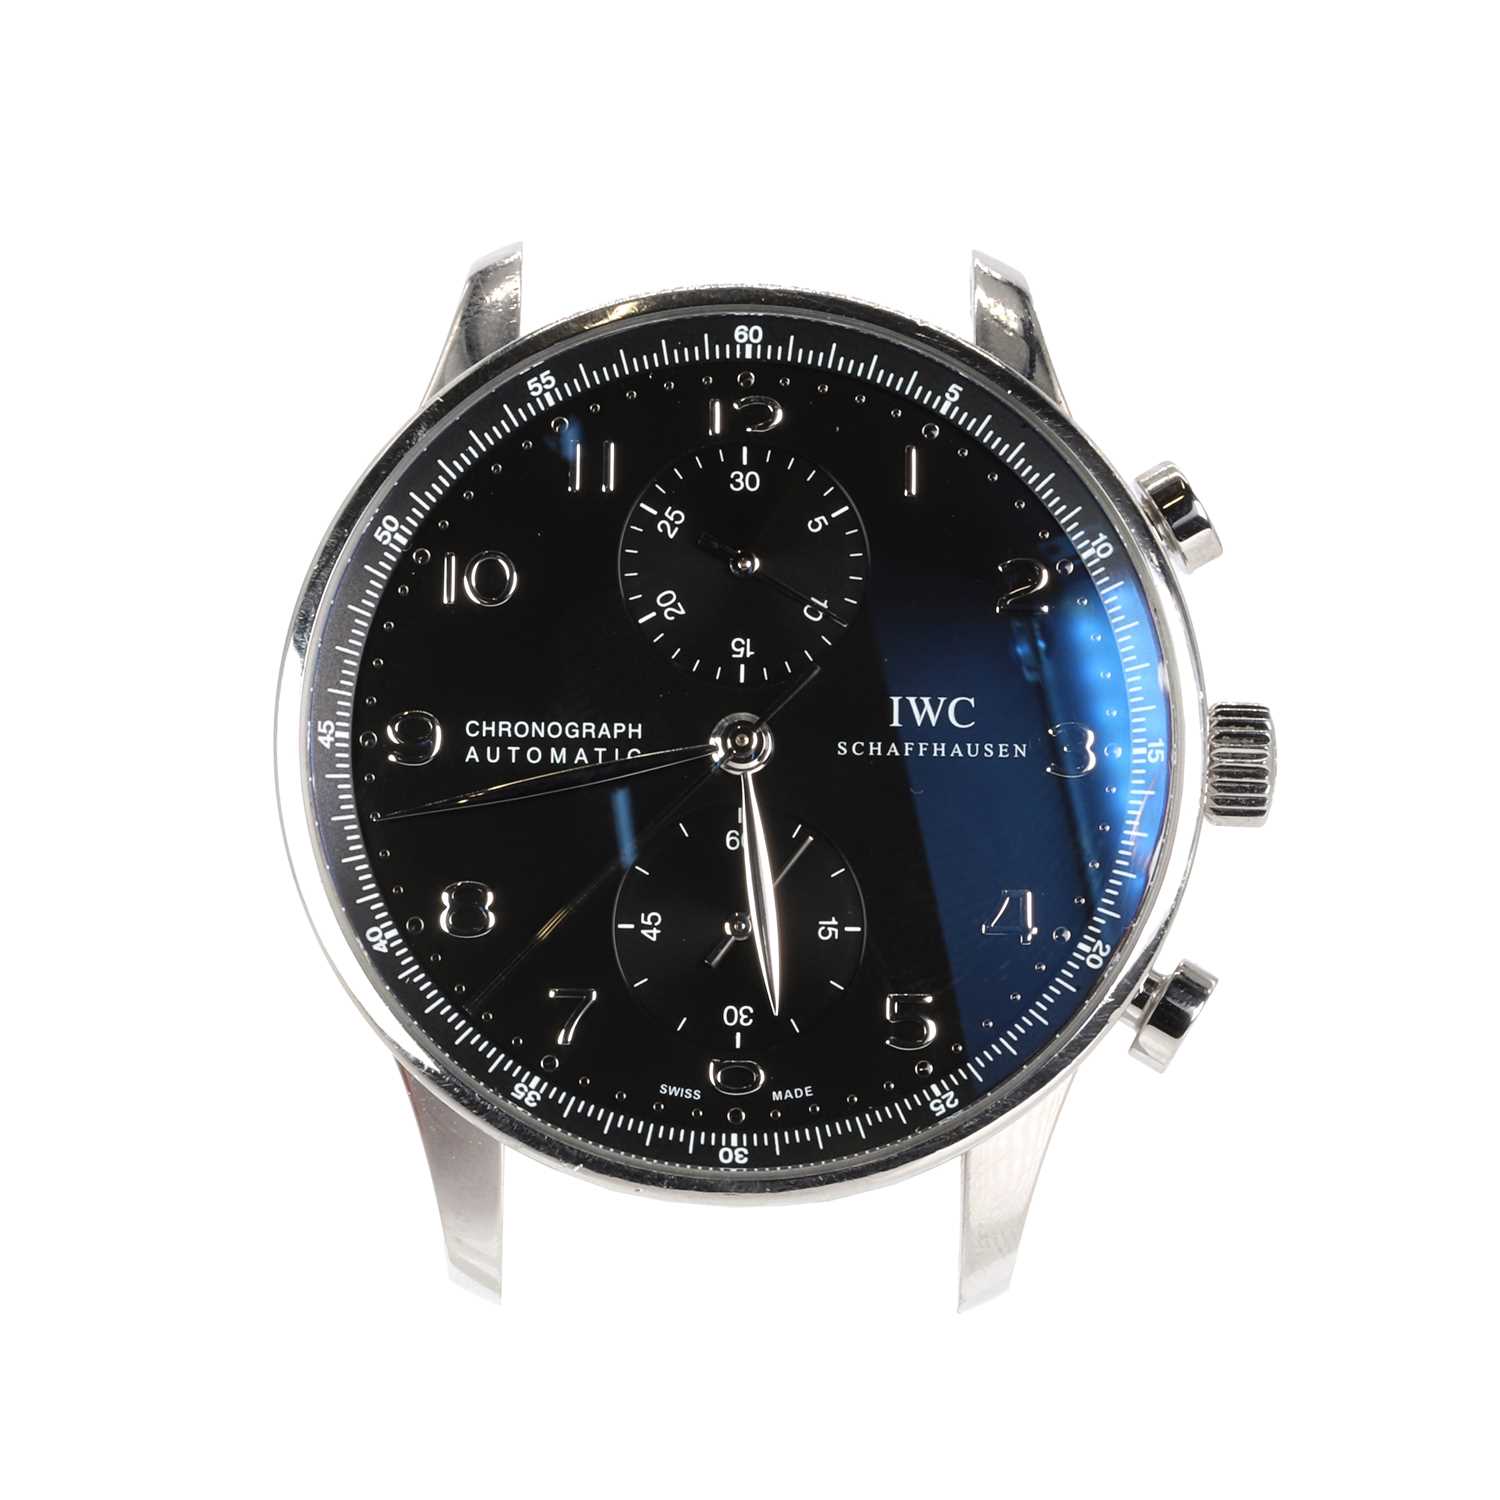 A gentlemen's stainless steel IWC Schaffhausen chronograph automatic strap watch, - Image 2 of 5